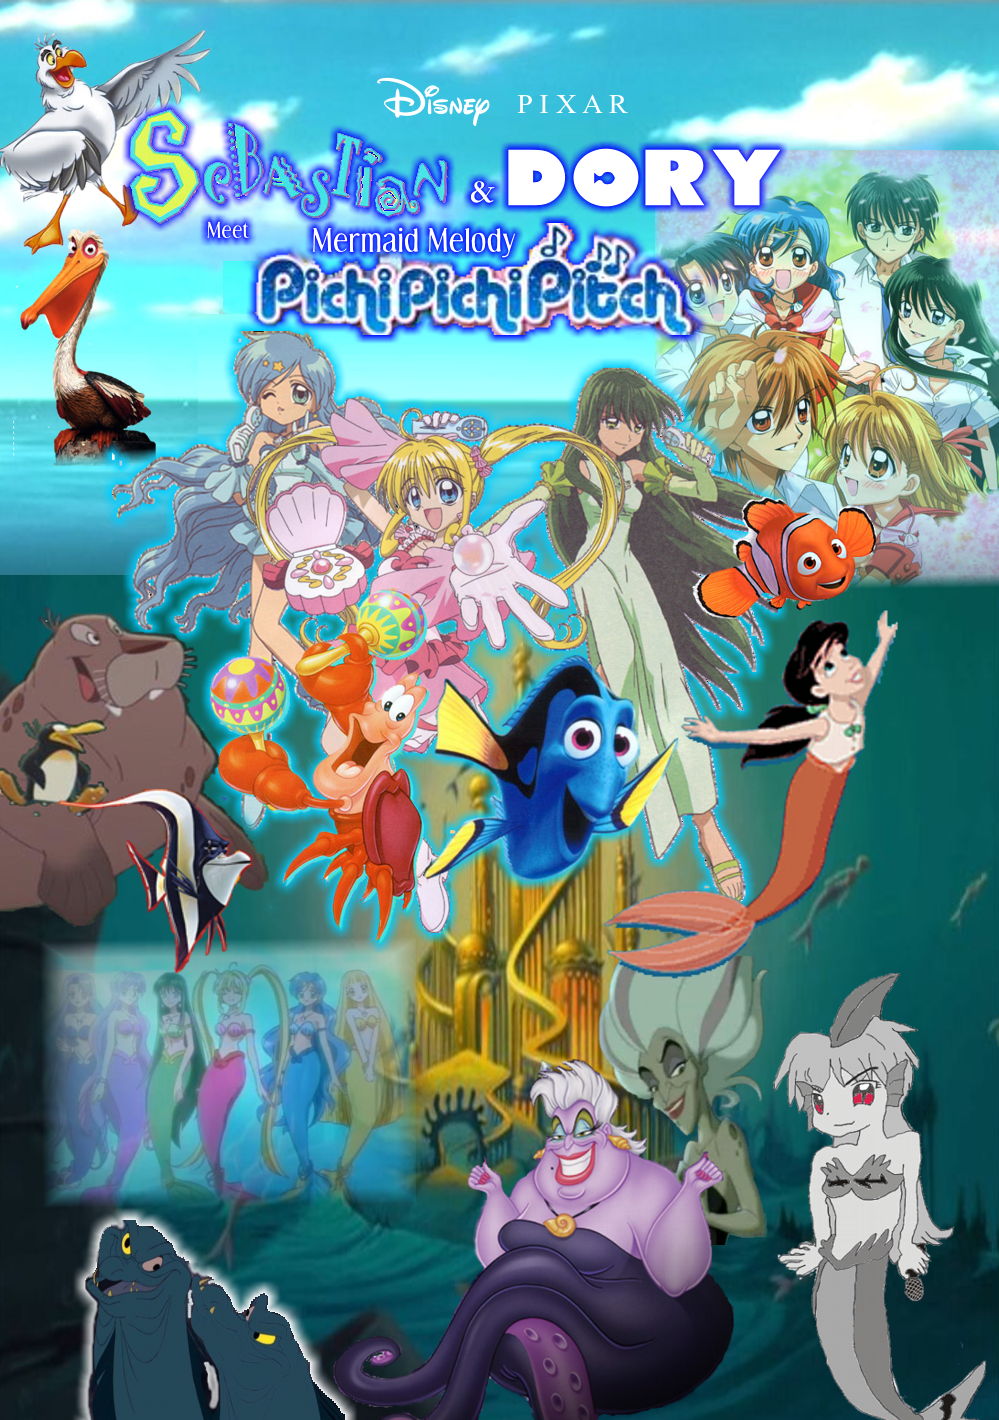 Disney PIXAR's Sebastian and Dory meet Mermaid Melody Pichi Pichi